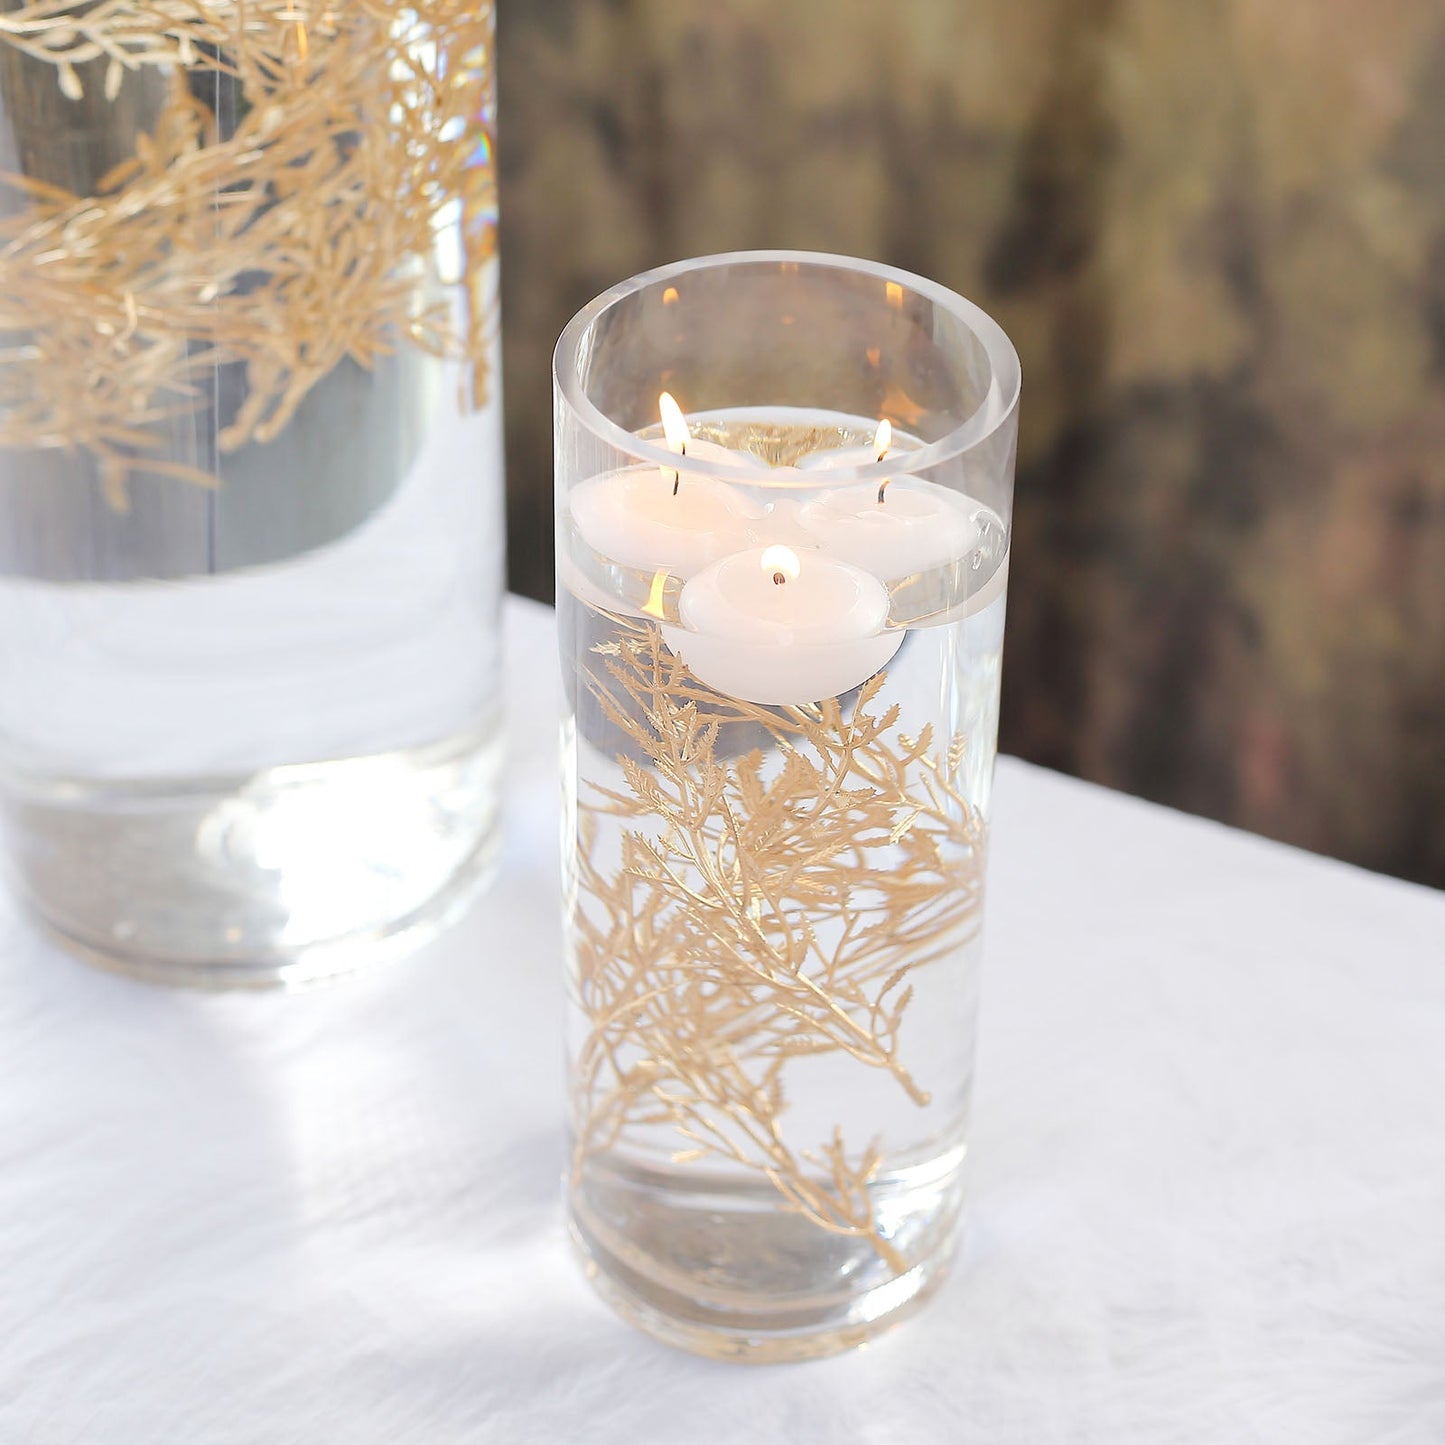 25 Pack Mini Metallic Gold Artificial Fern Leaf Branch Stems, Flower Vase Filler For Floating Candle Centerpieces 6"